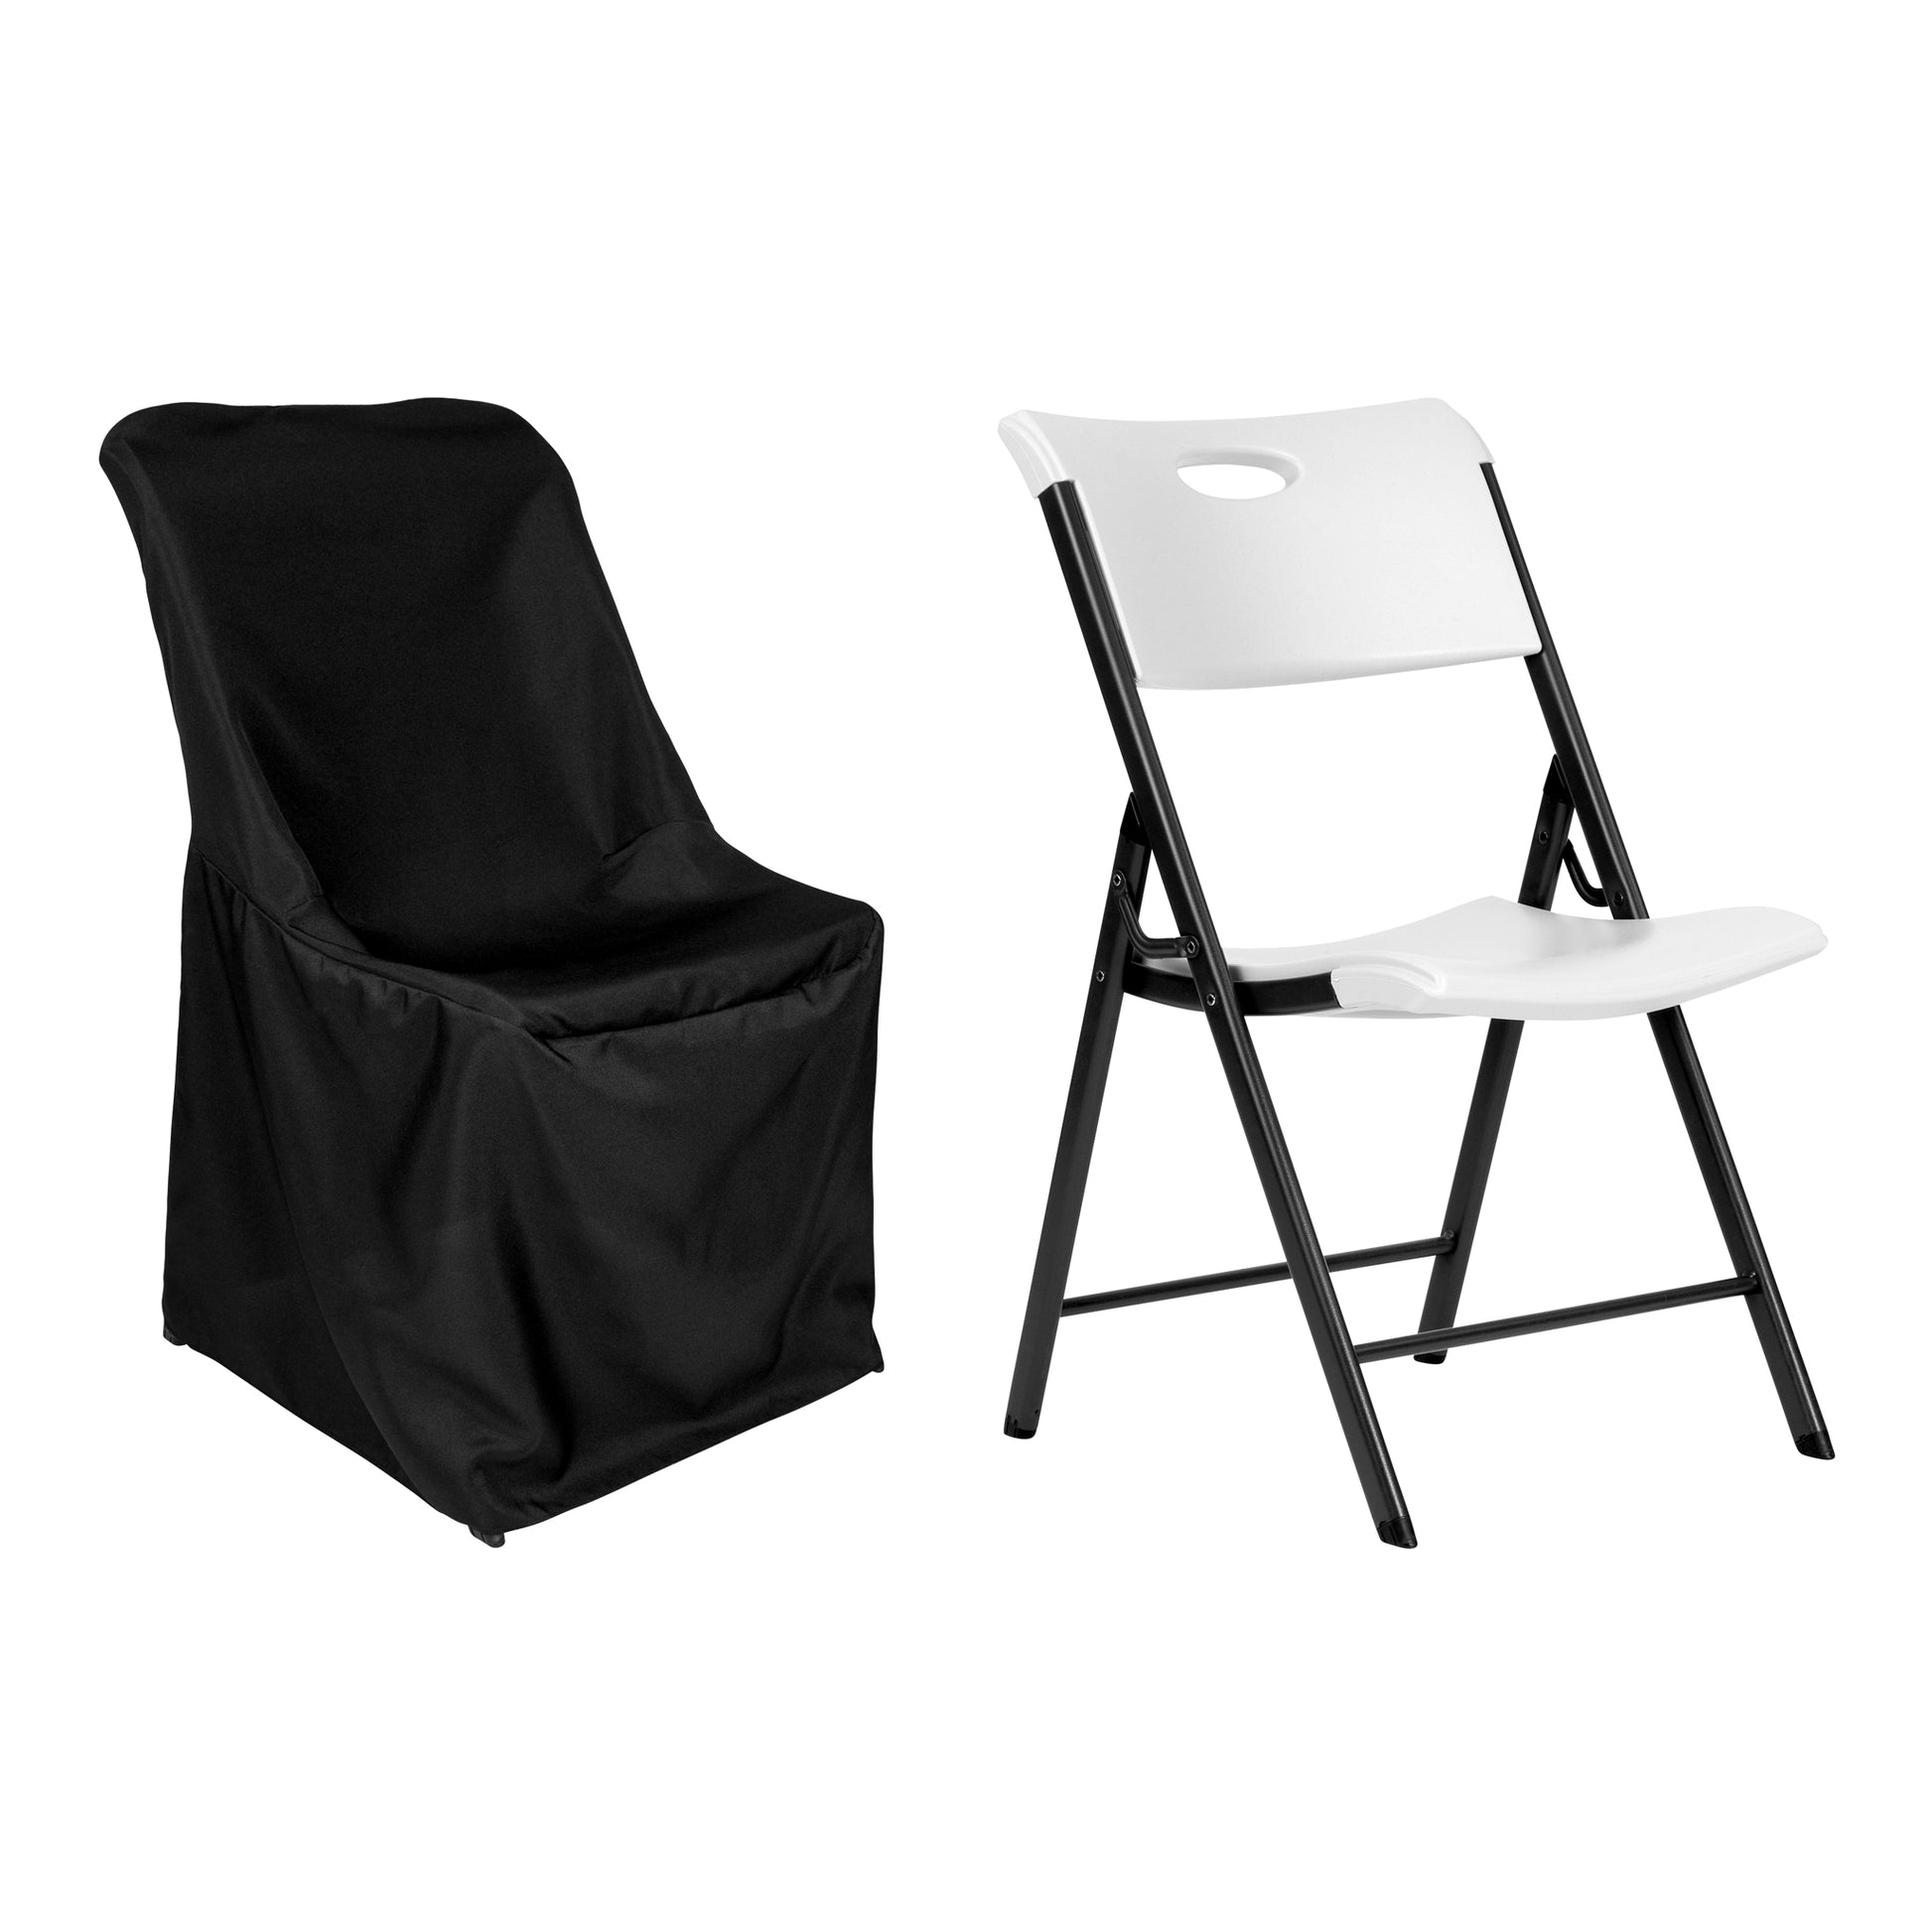 Contemporary LIFETIME folding chair Cover - Black at CV Linens